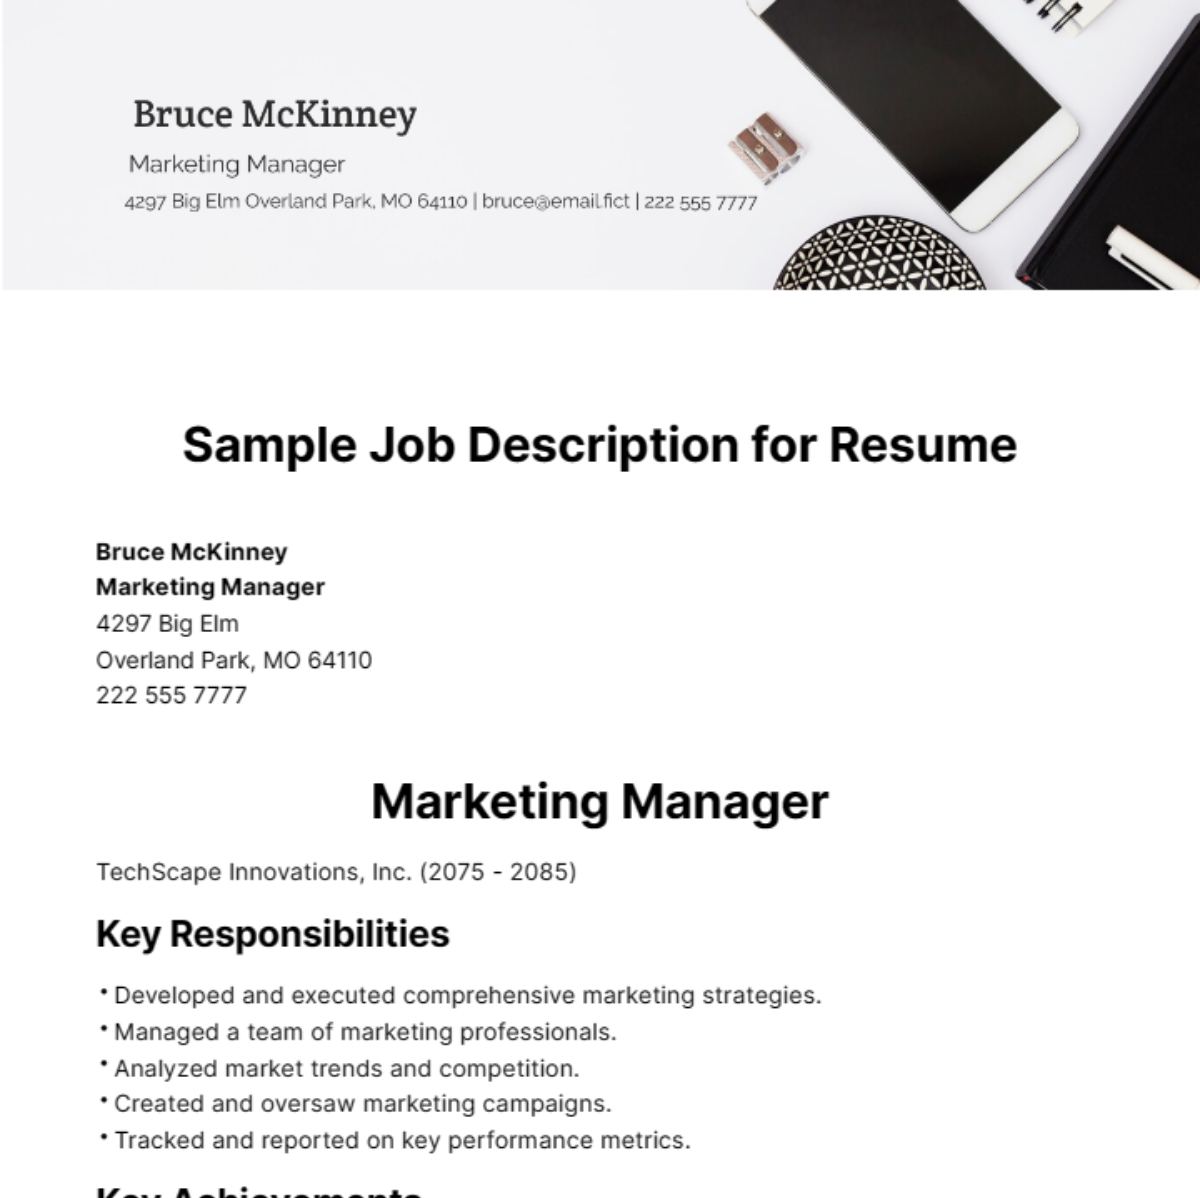 Sample Job Description for Resume Template